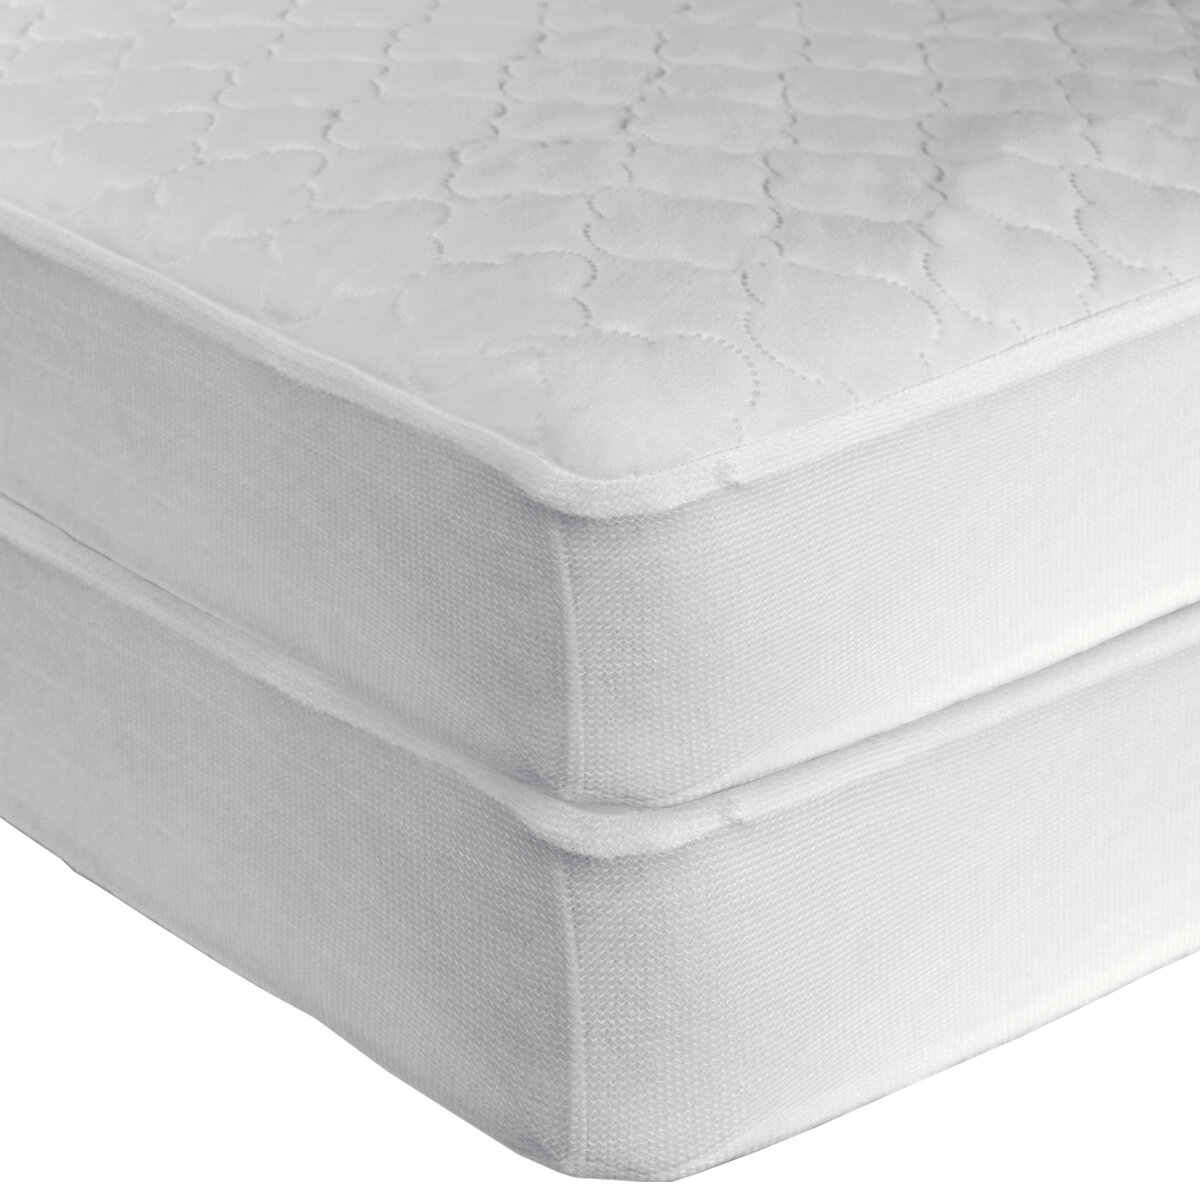 crib mattress padding for comfort